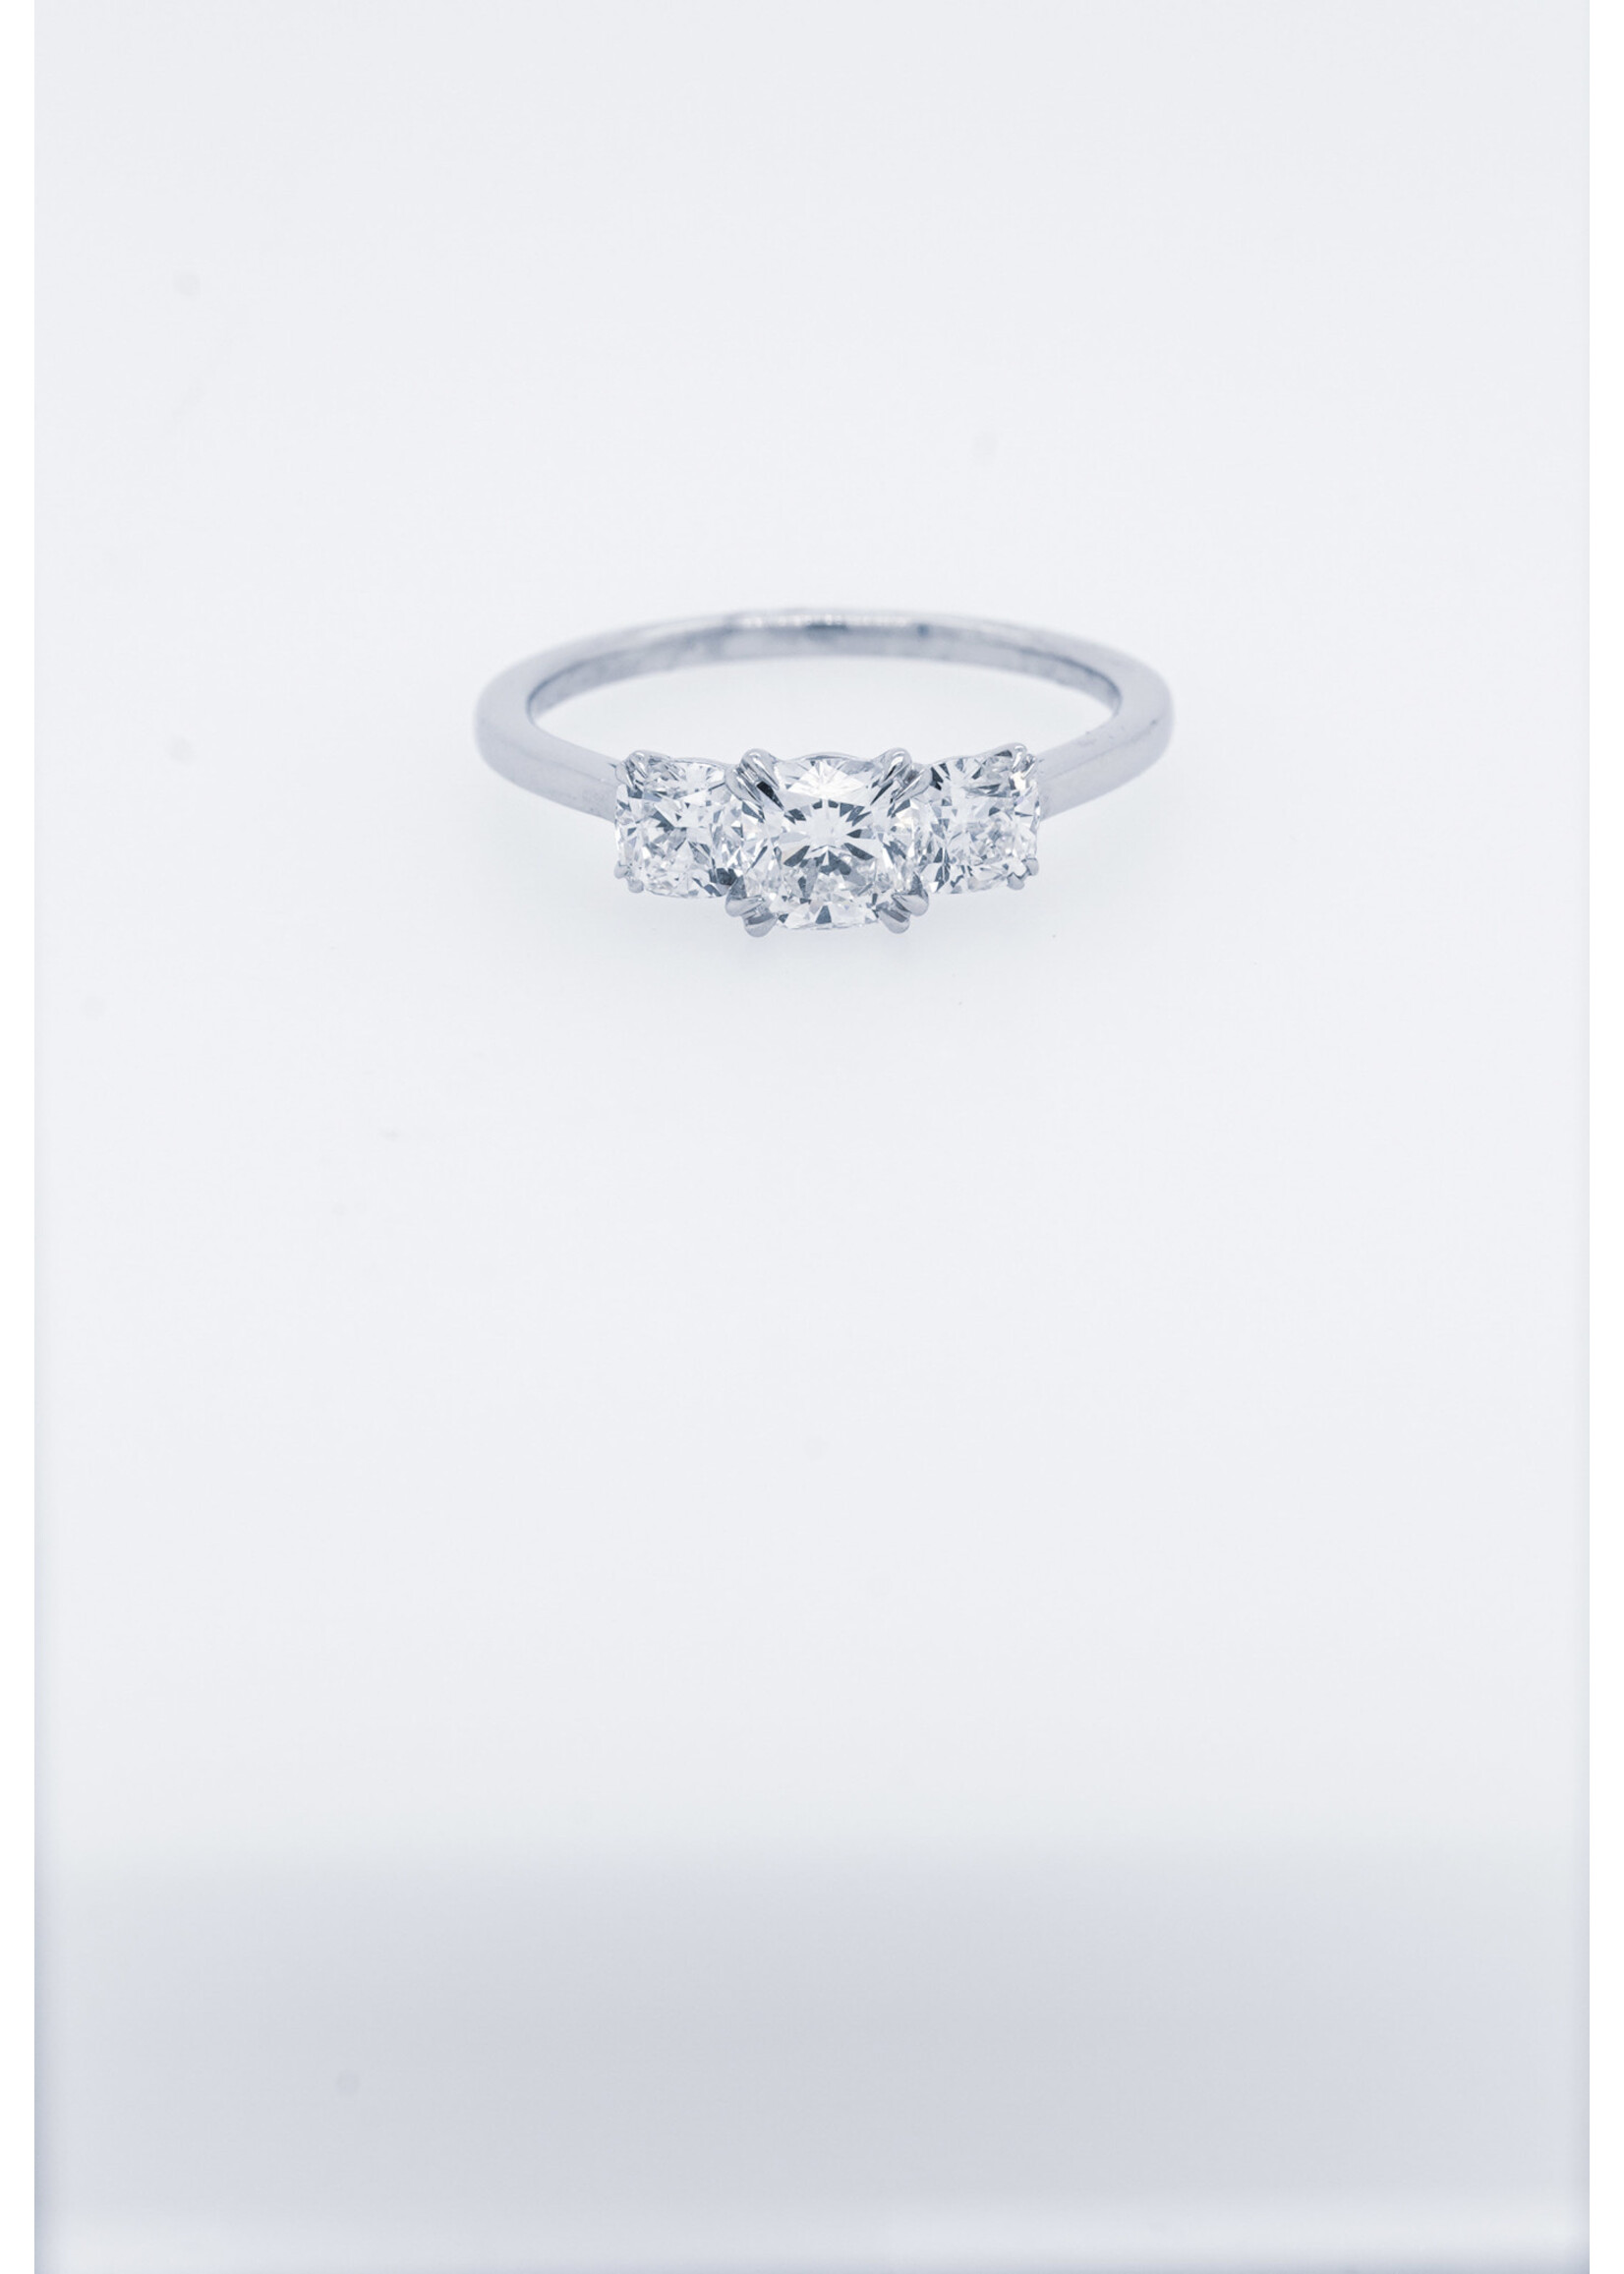 Platinum 3.5g 1.20ctw (0.62ctr) I/VS1 Cushion Diamond Three Stone Engagement Ring (size 6.5)